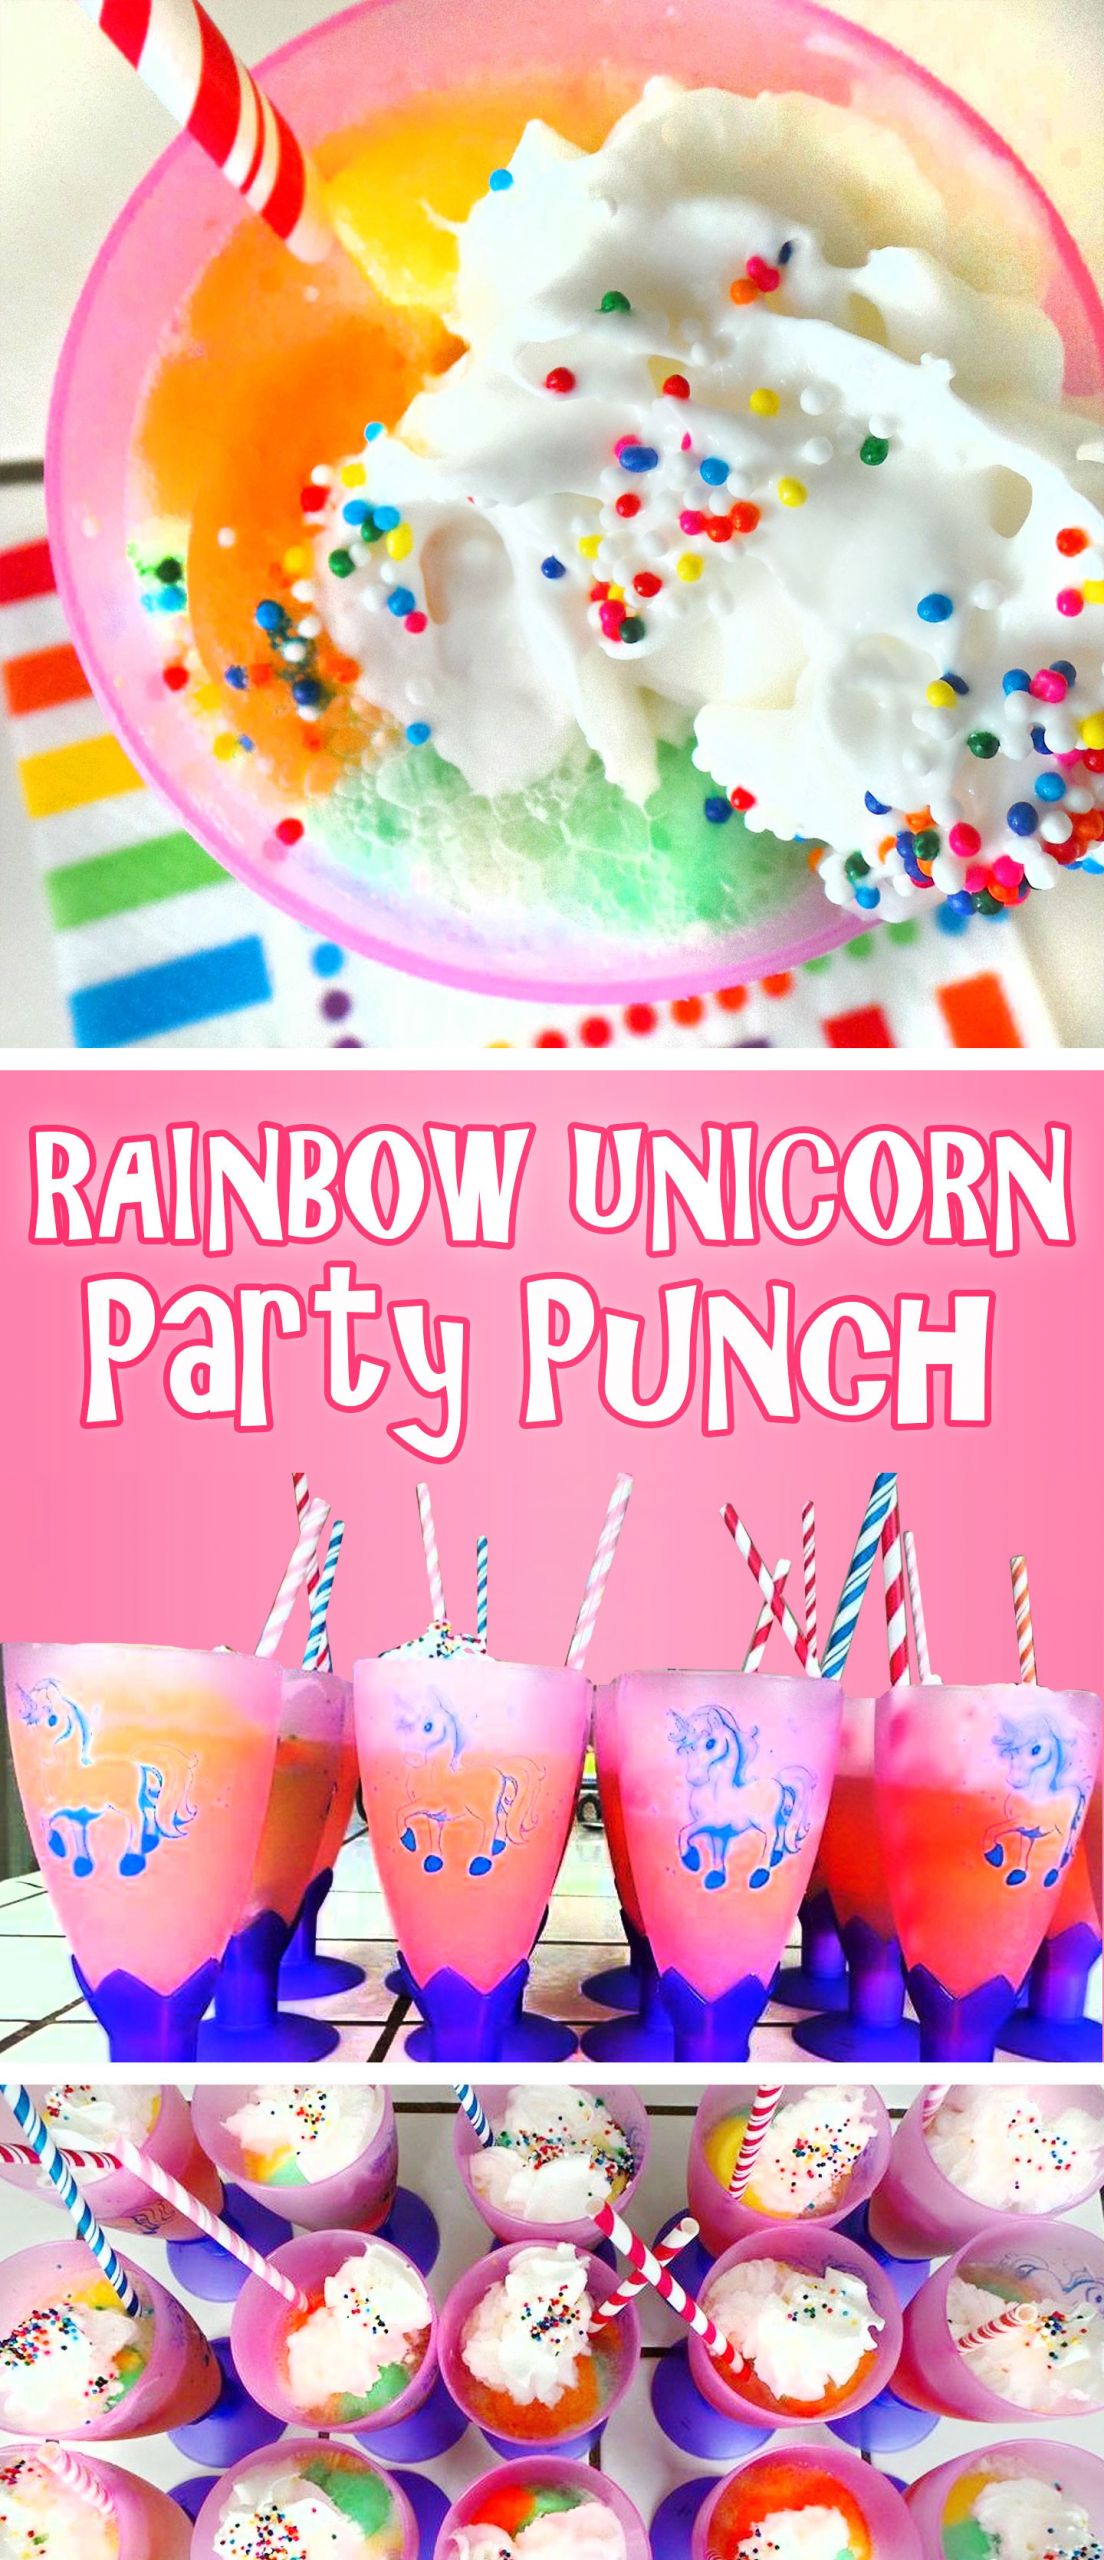 Kids Unicorn Party Food Ideas
 Rainbow Unicorn Party Punch